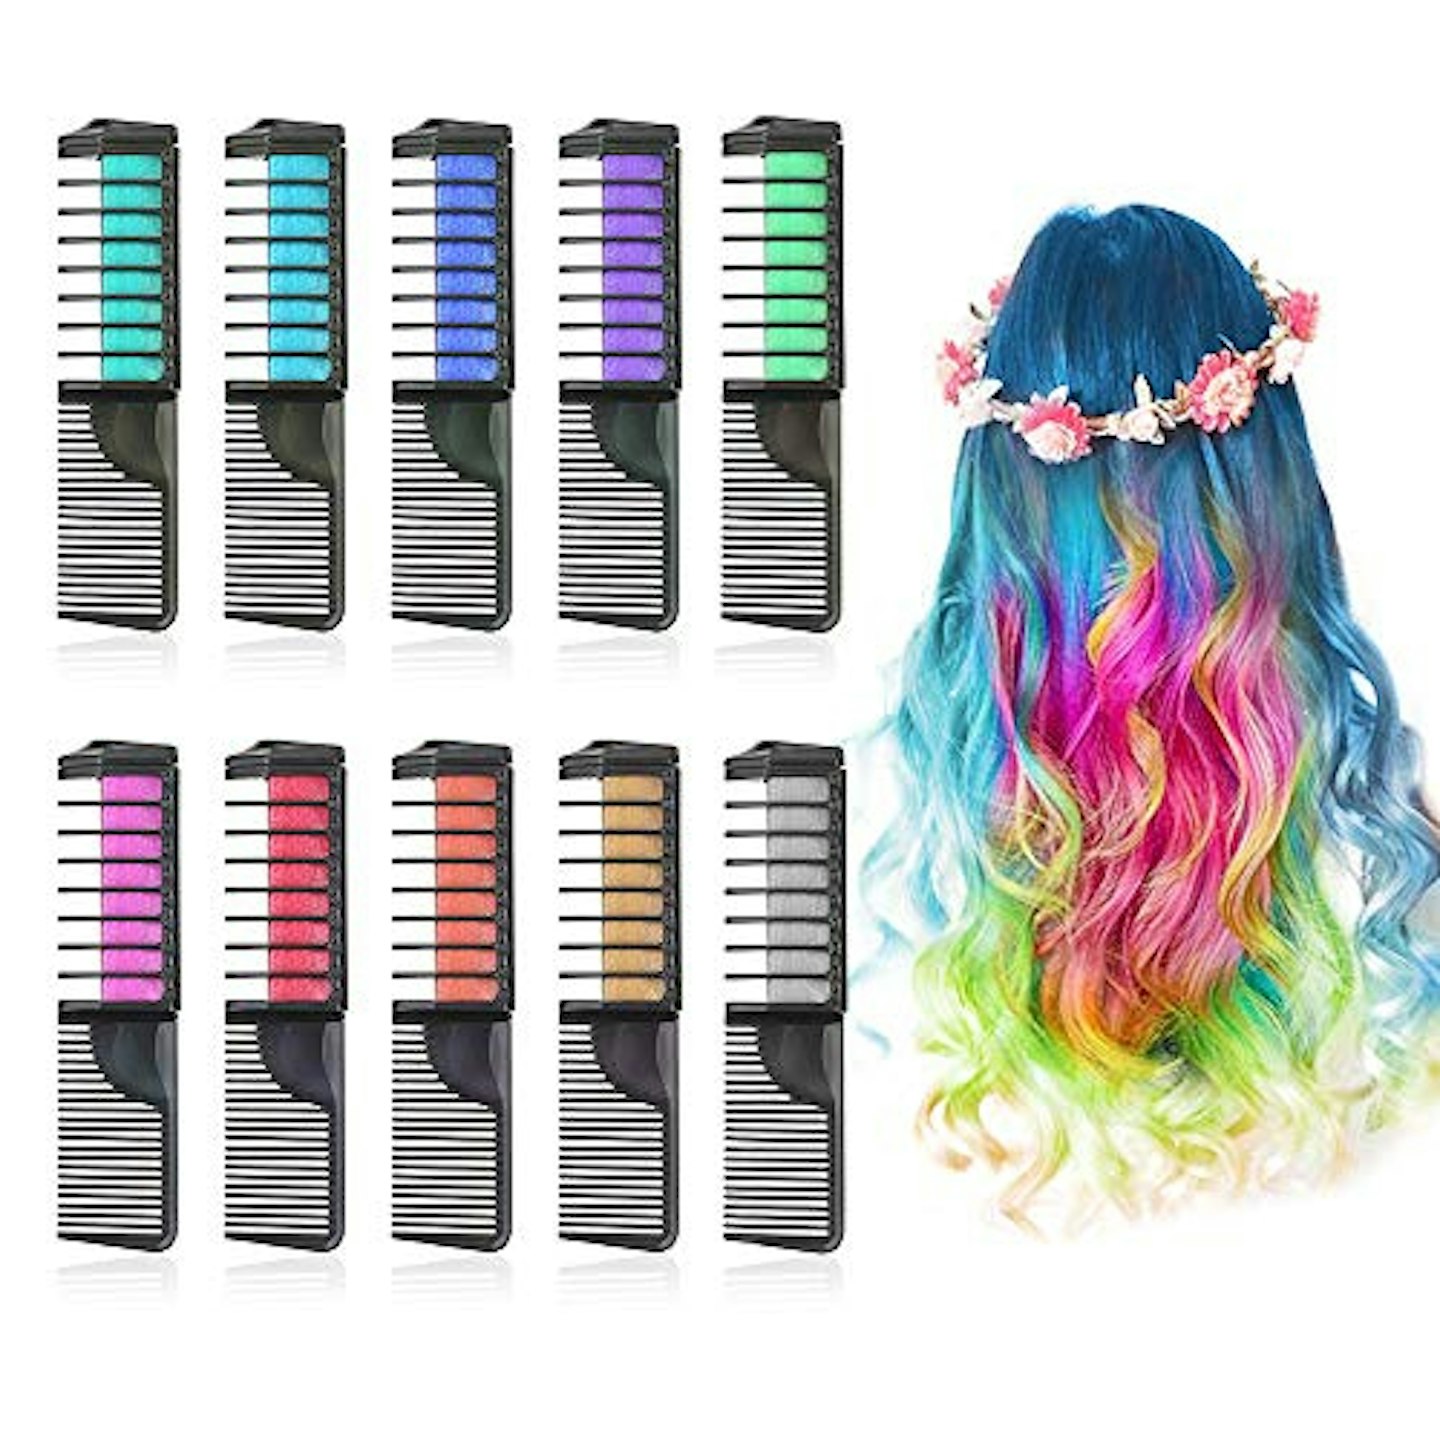 Lictin Hair Chalk Dye Combs